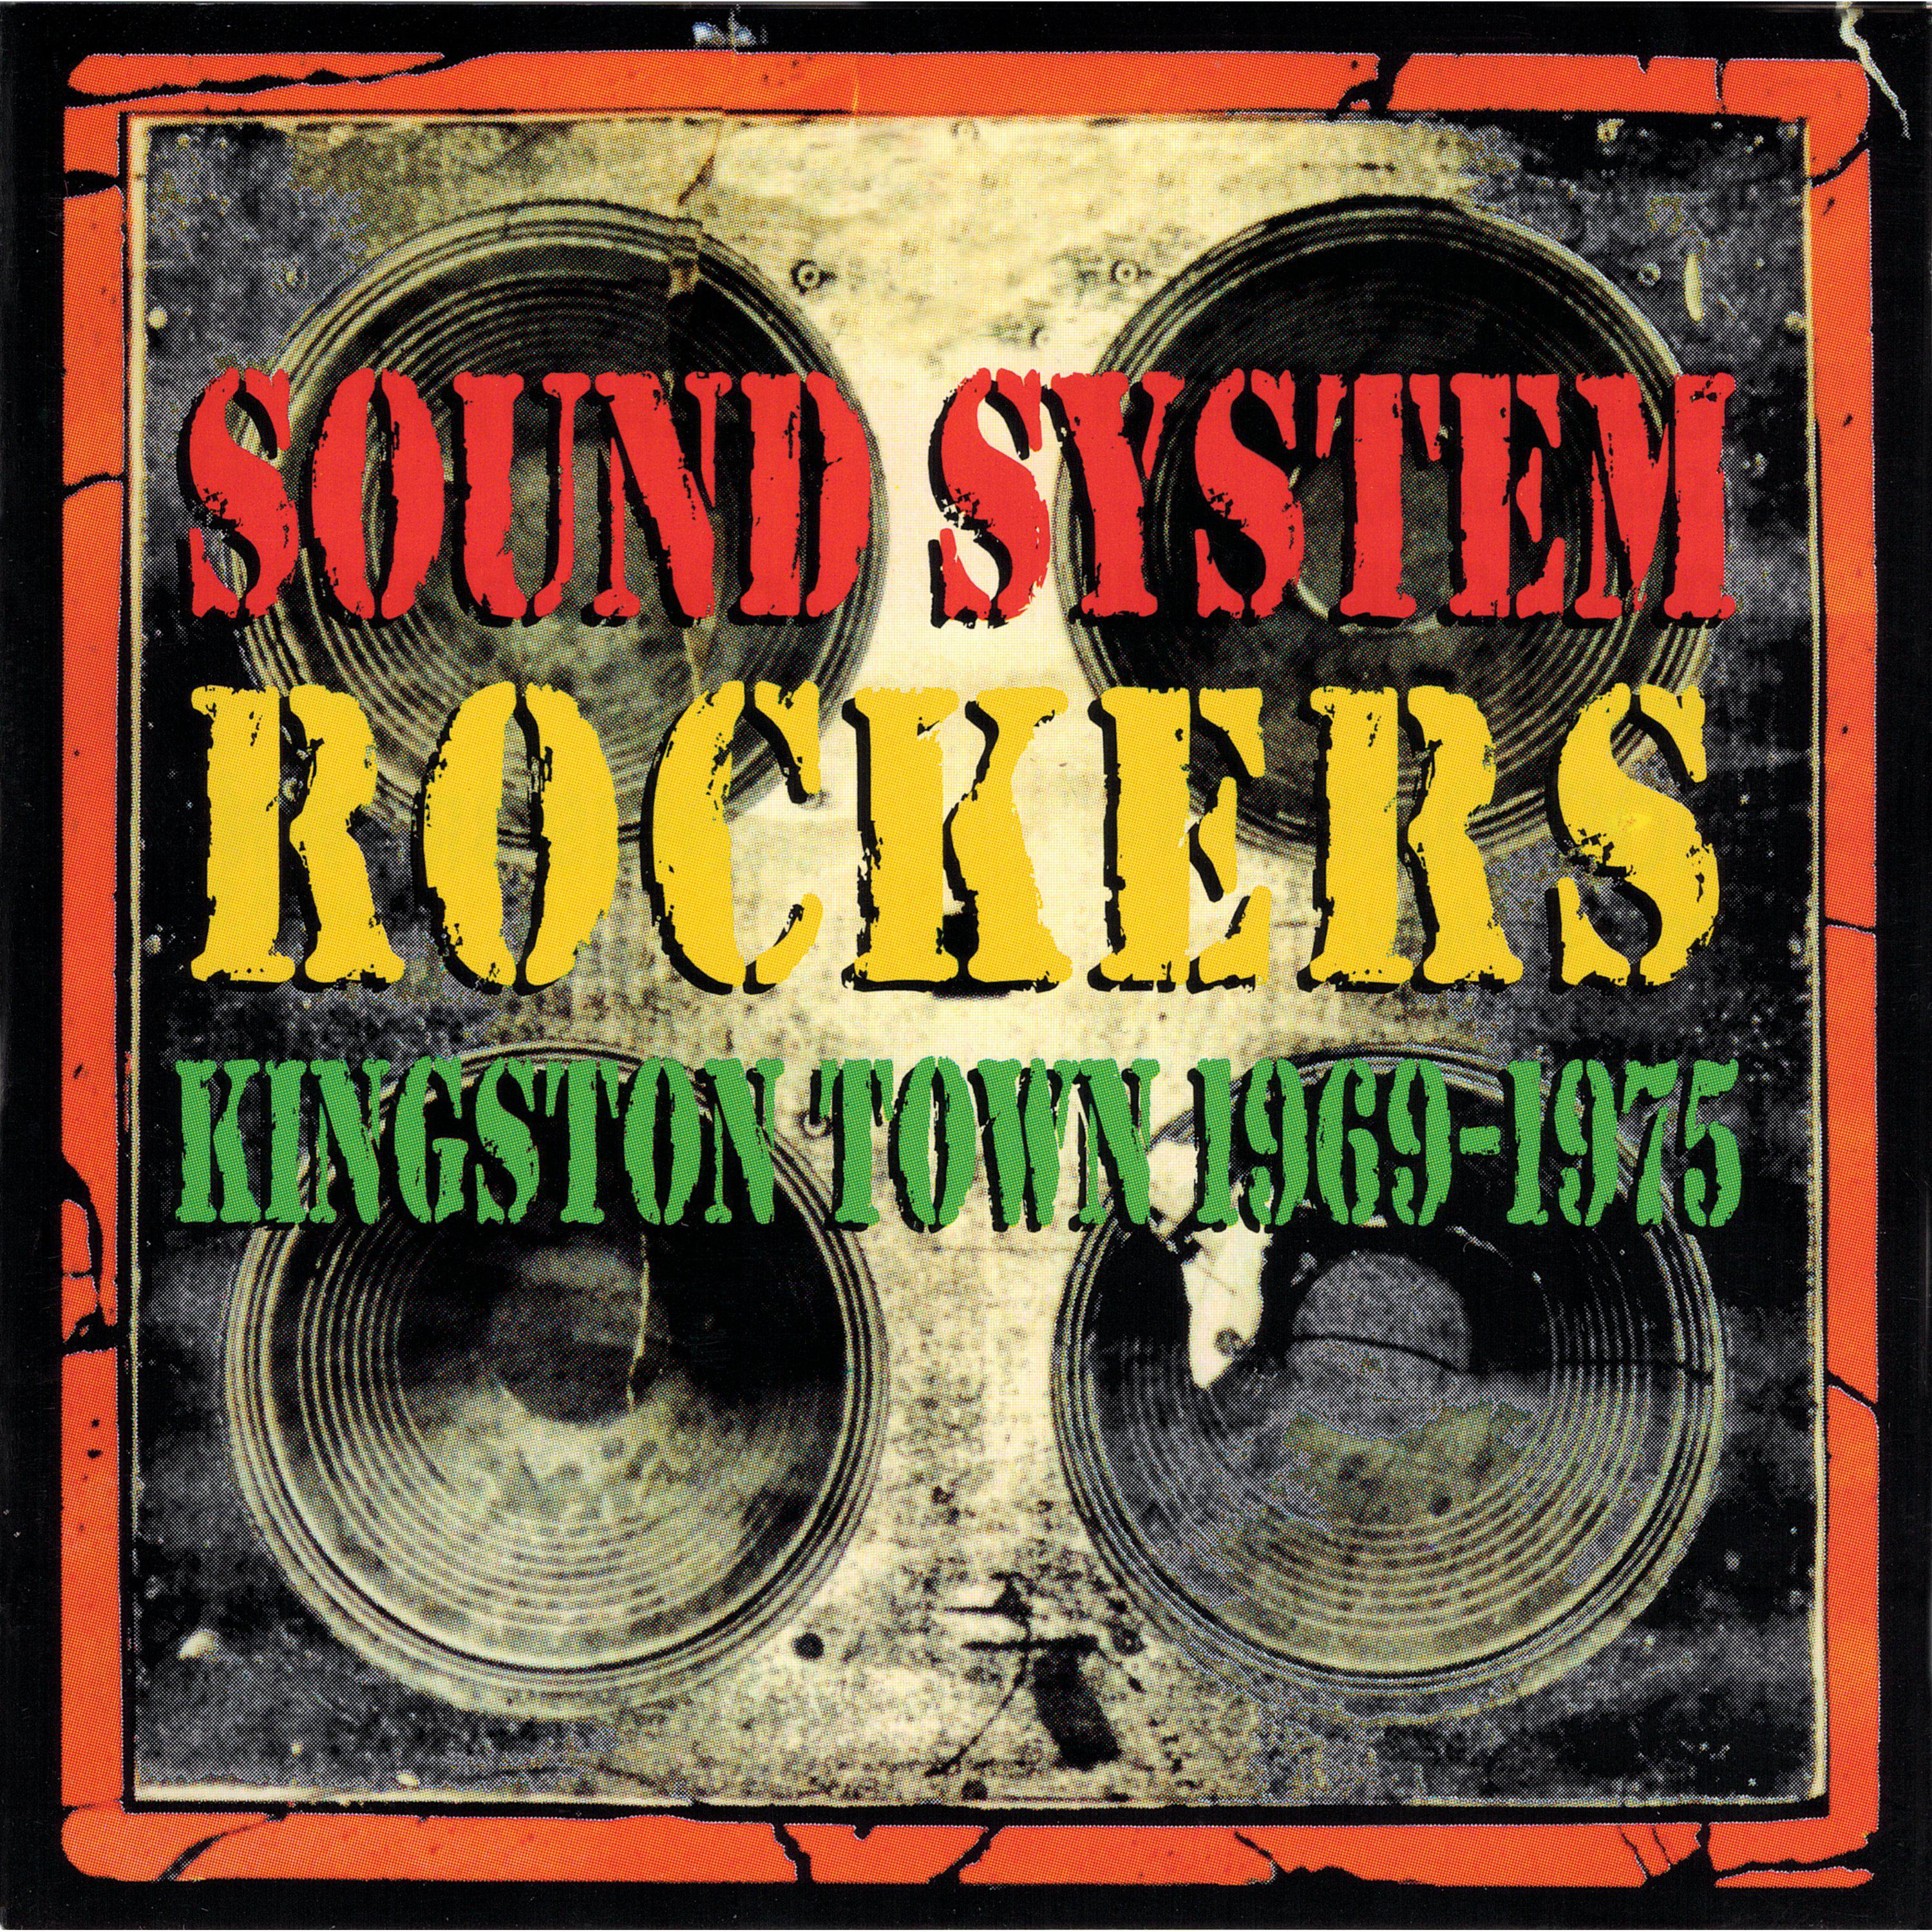 Sound System Rockers: Kingston Town 1969-1975